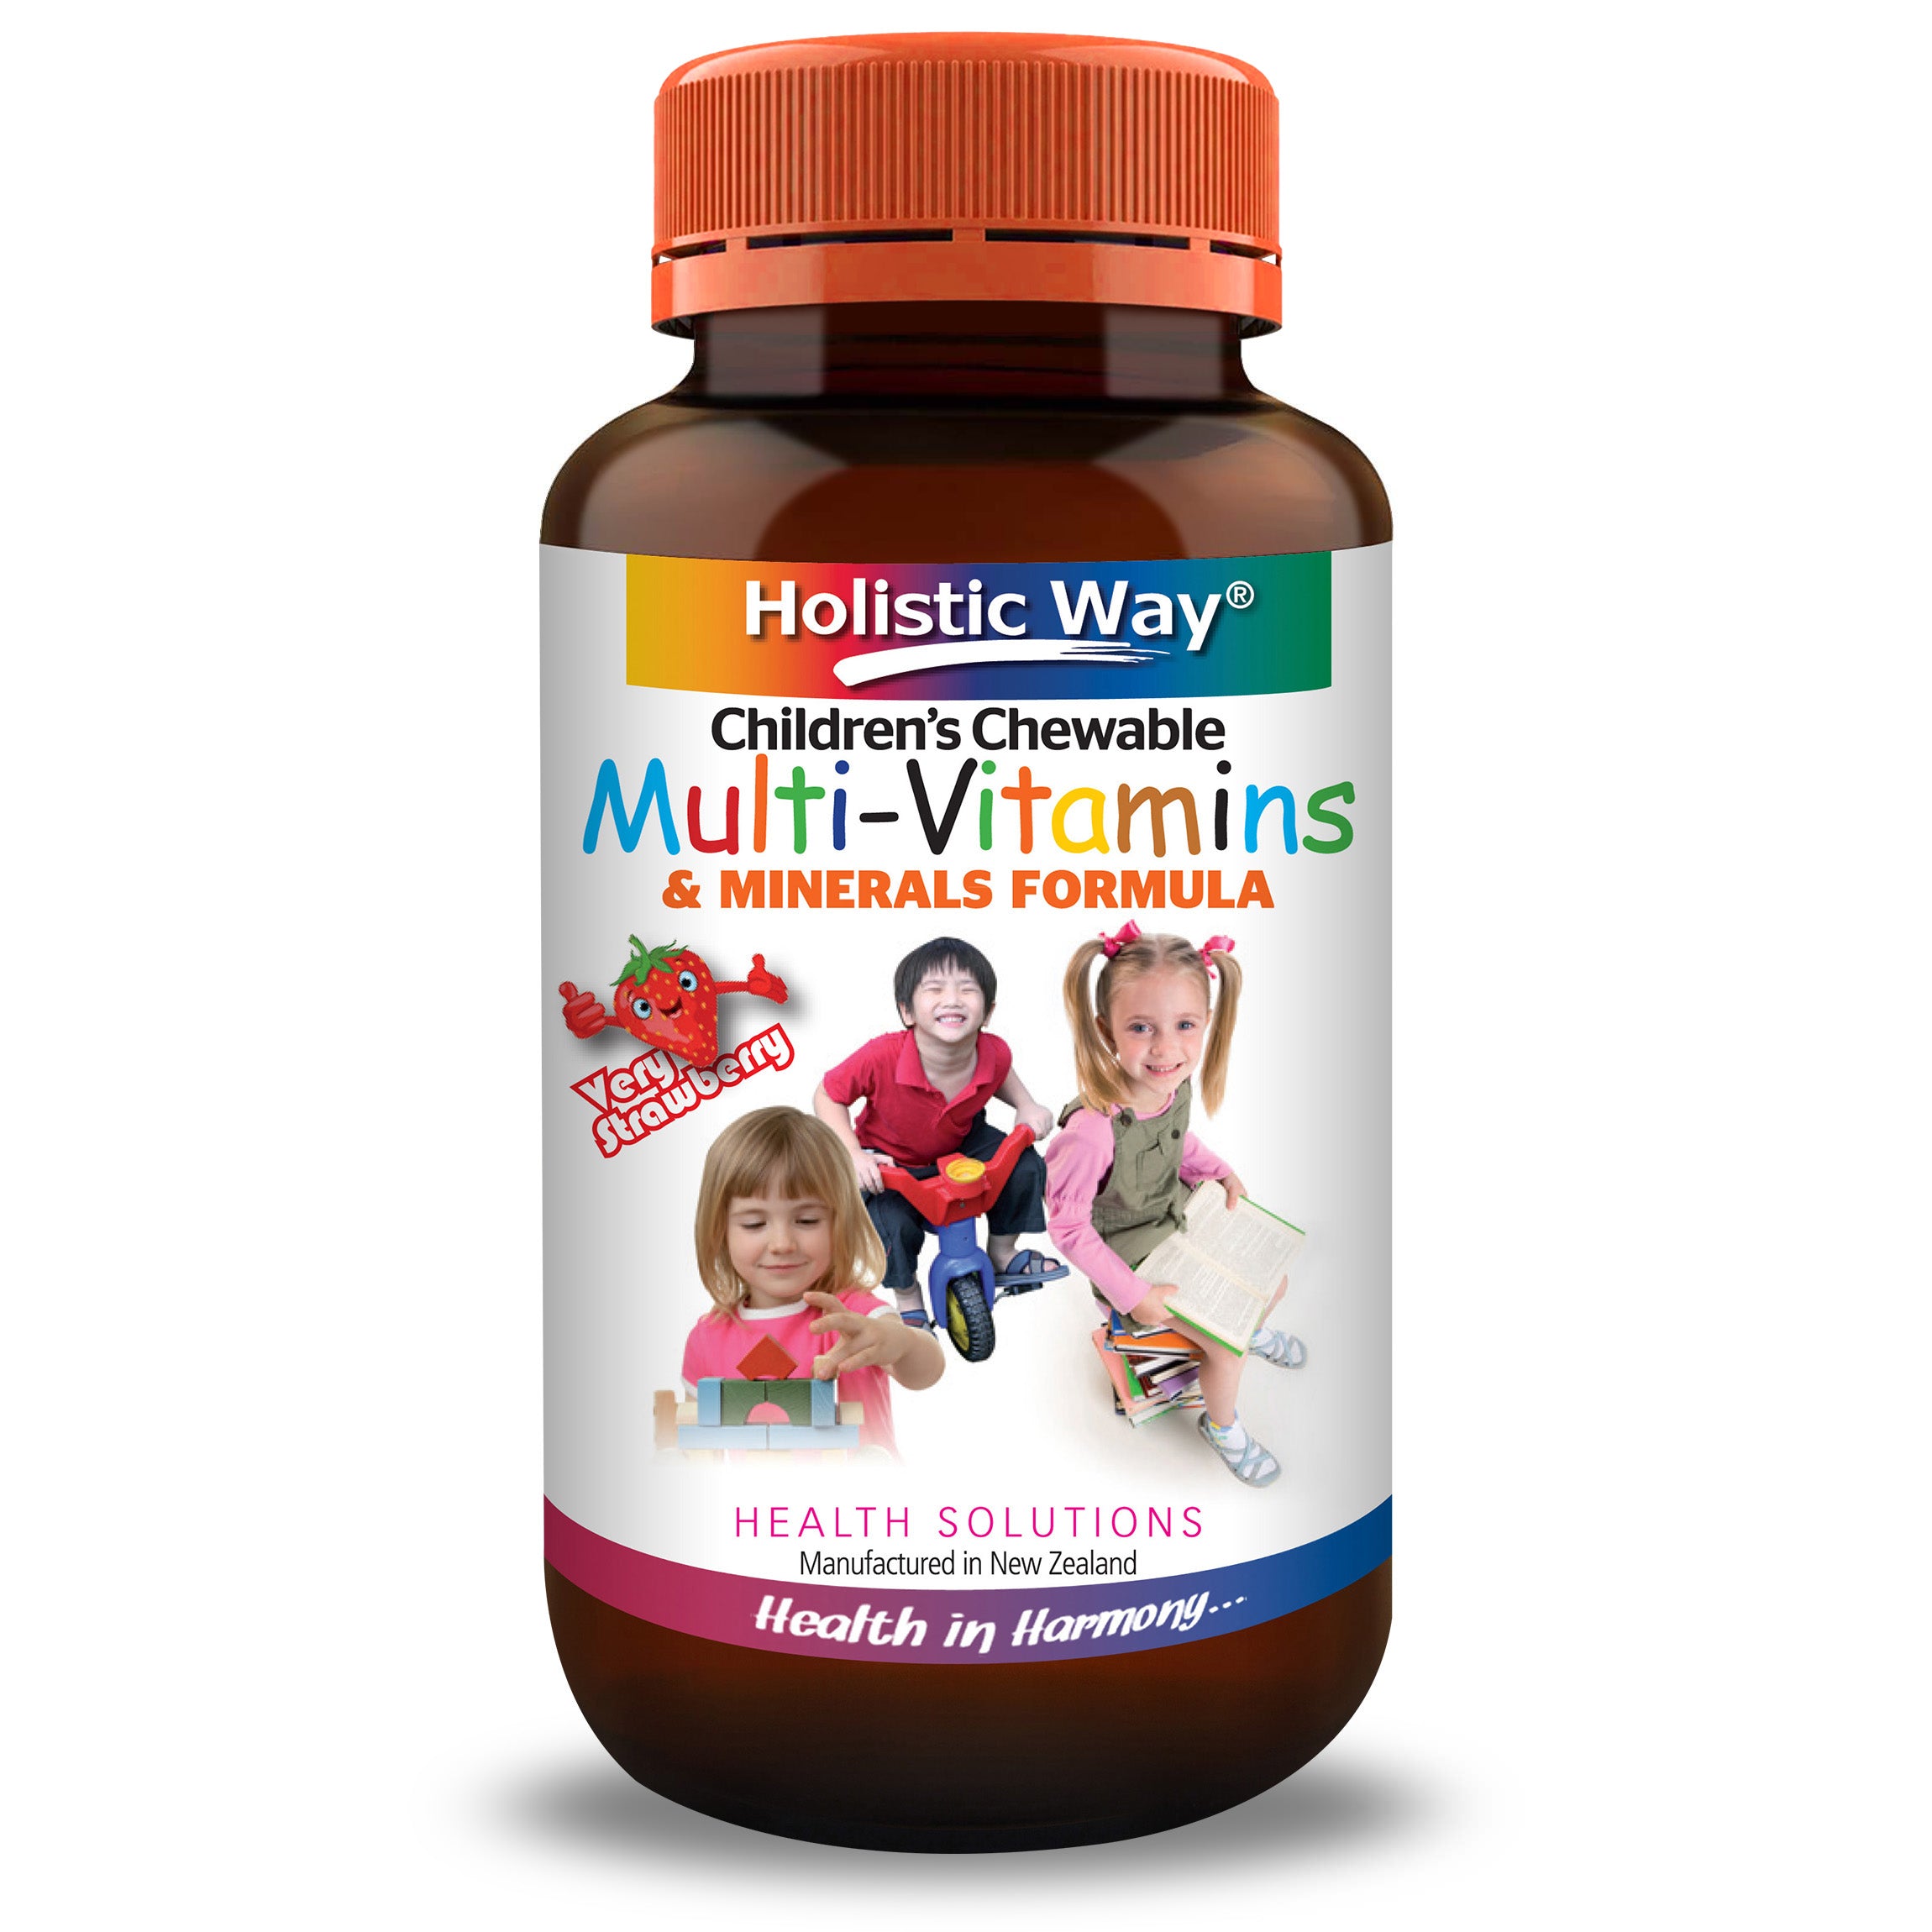 Holistic Way Children's Chewable Multi-Vitamins & Minerals Formula (60 Tablets)